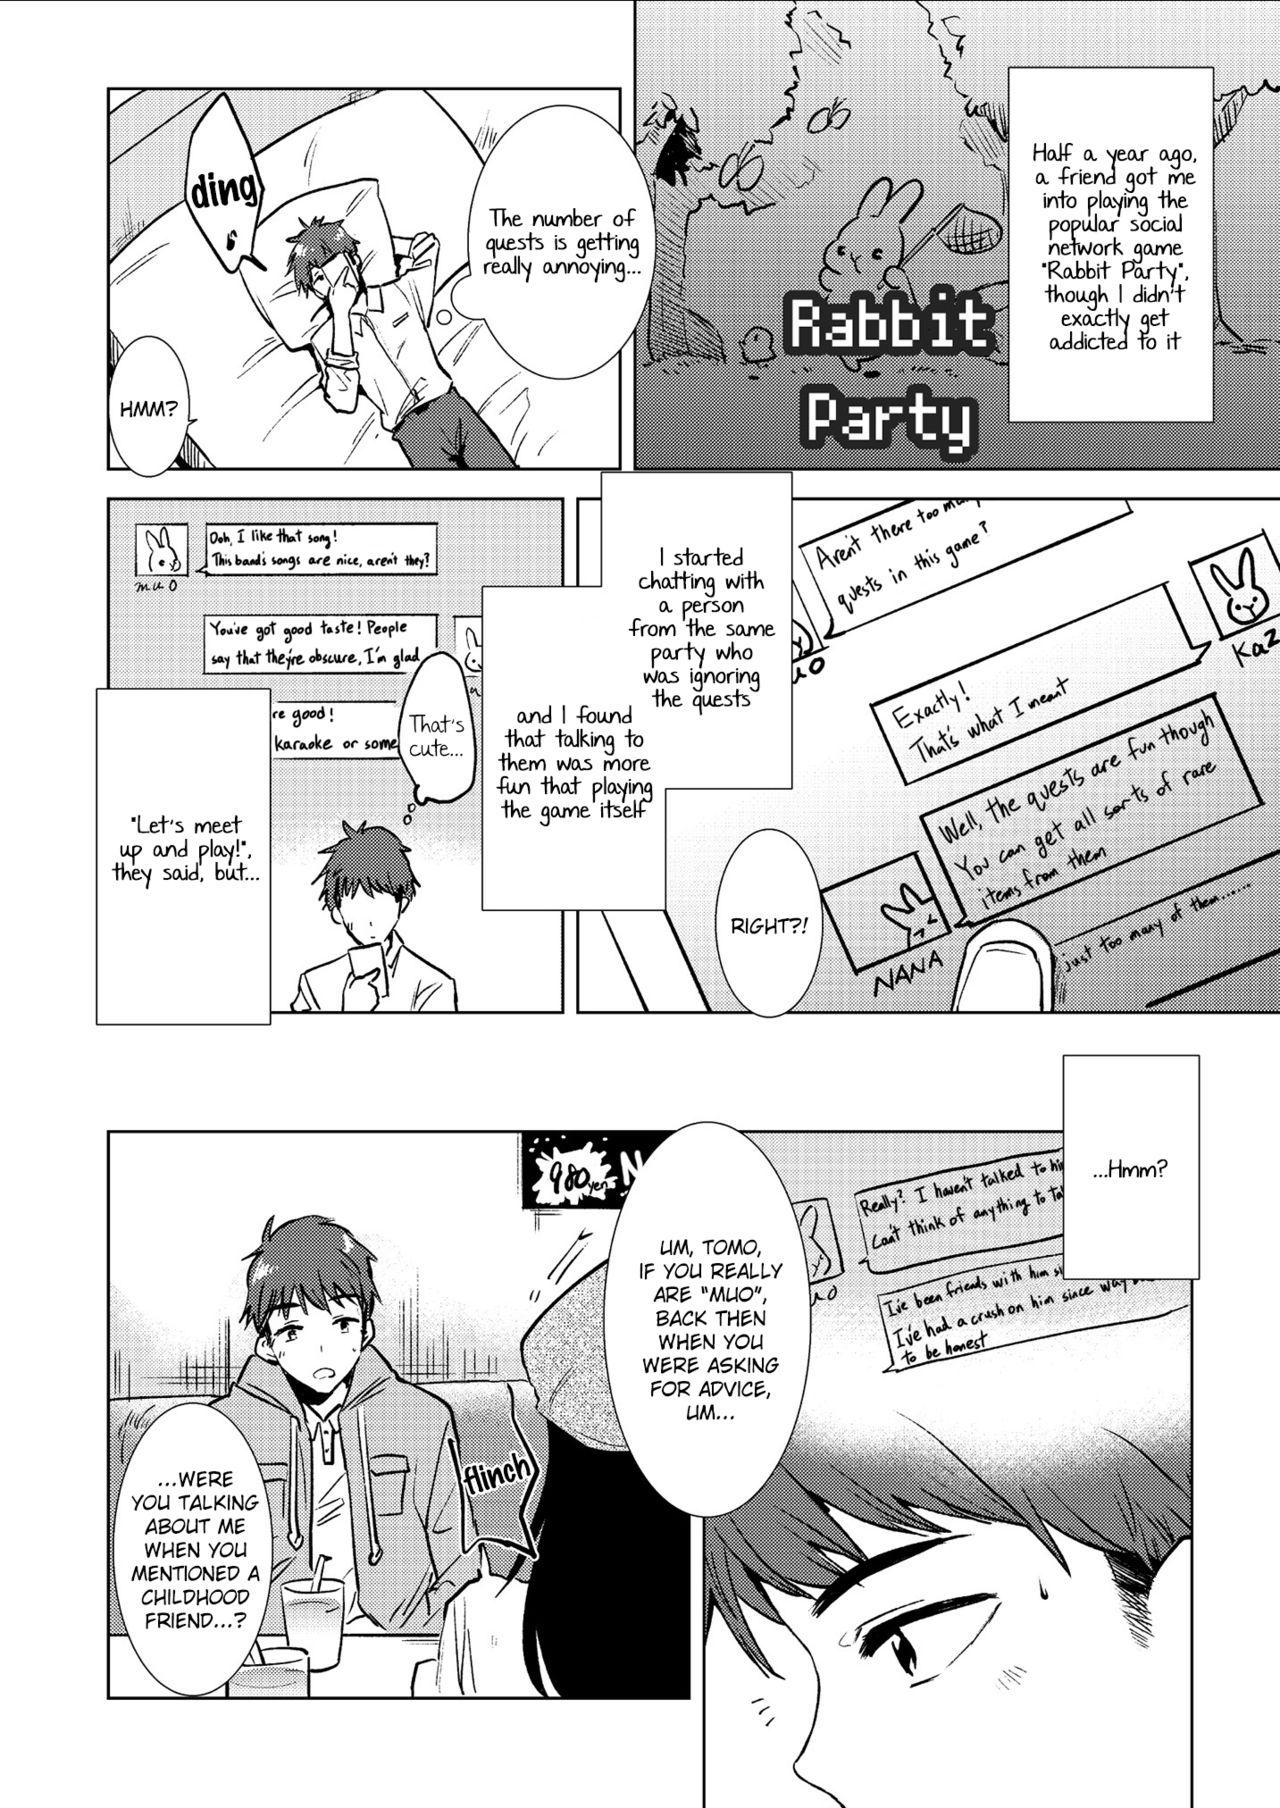 Men RabbitPartyoffline - Original Gym - Page 2